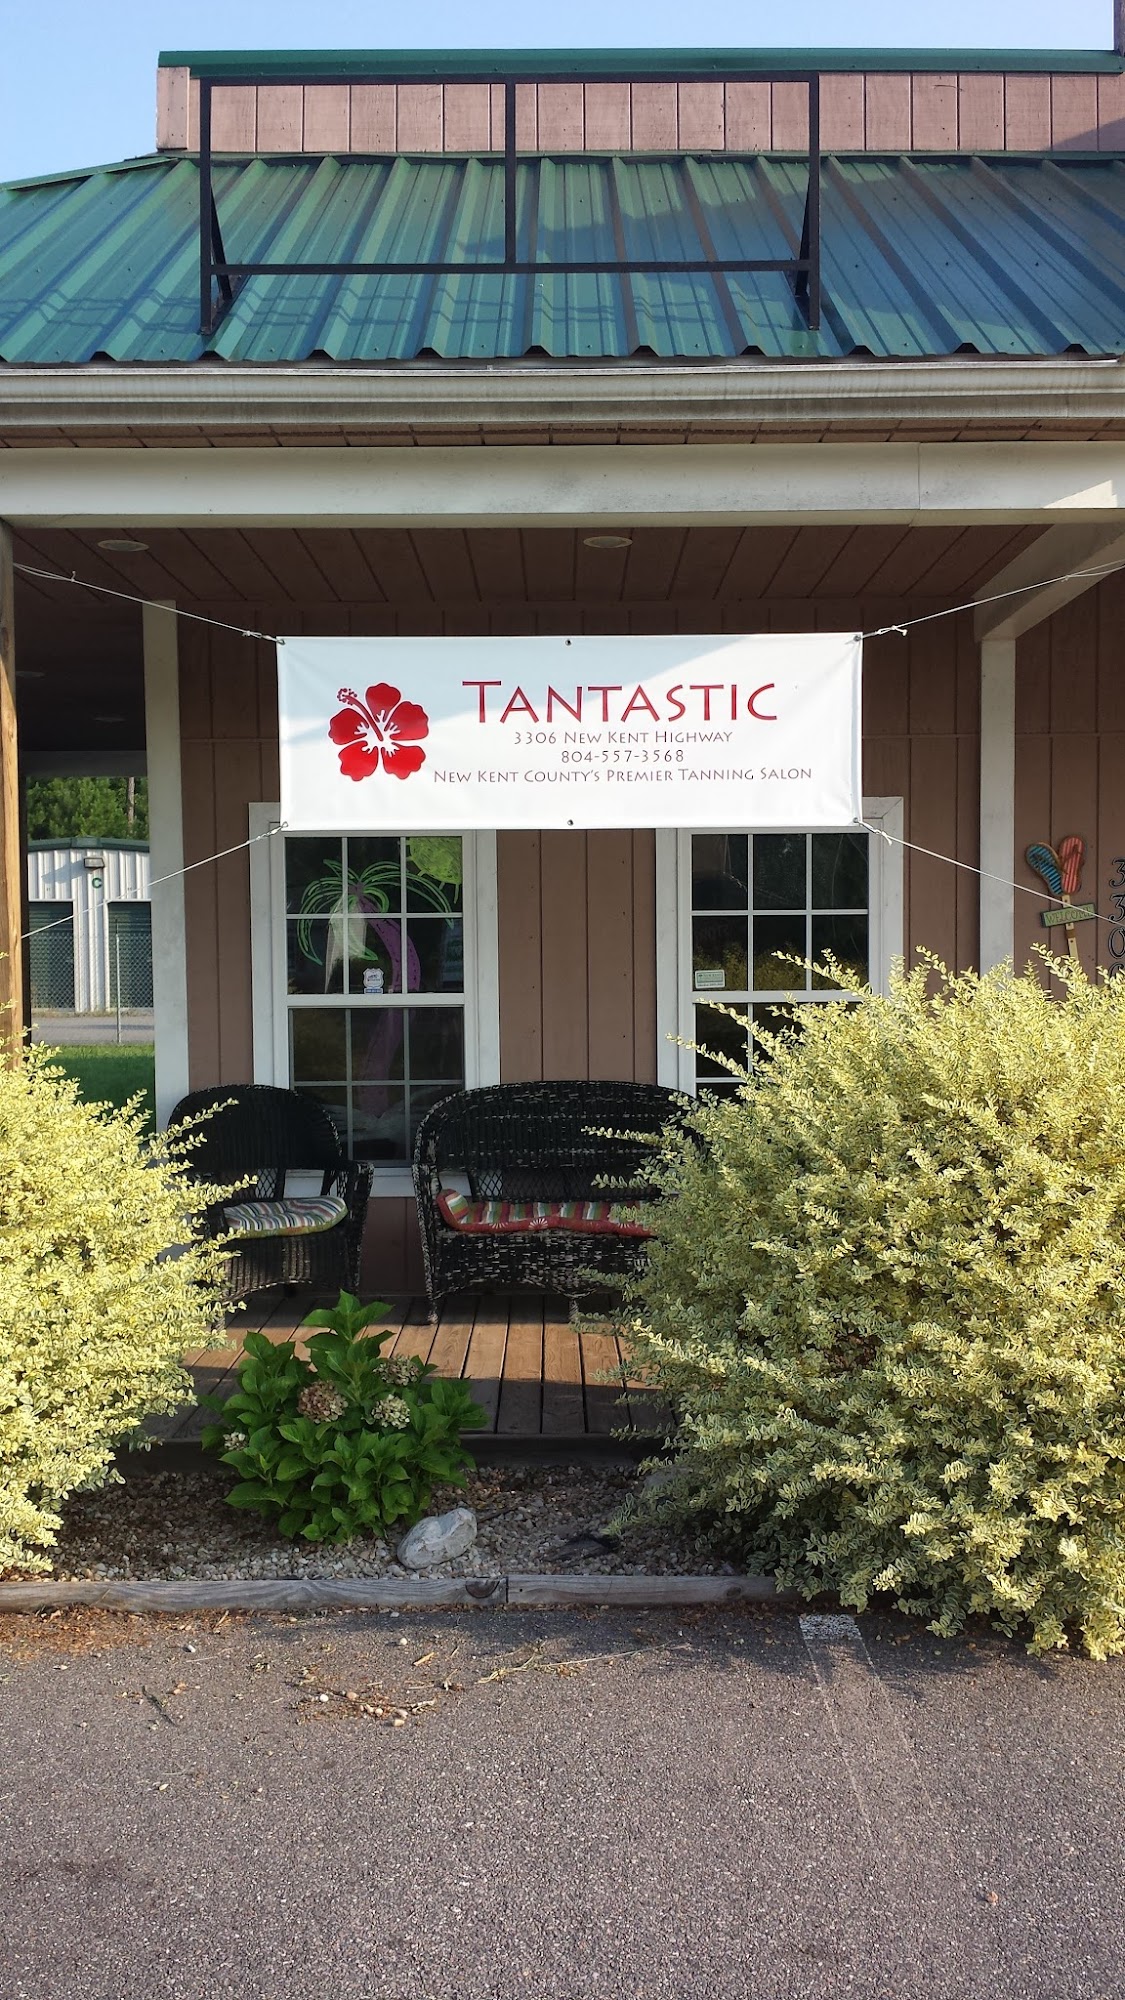 Tantastic Tanning Salon & Boutique 3306 New Kent Hwy, Quinton Virginia 23141